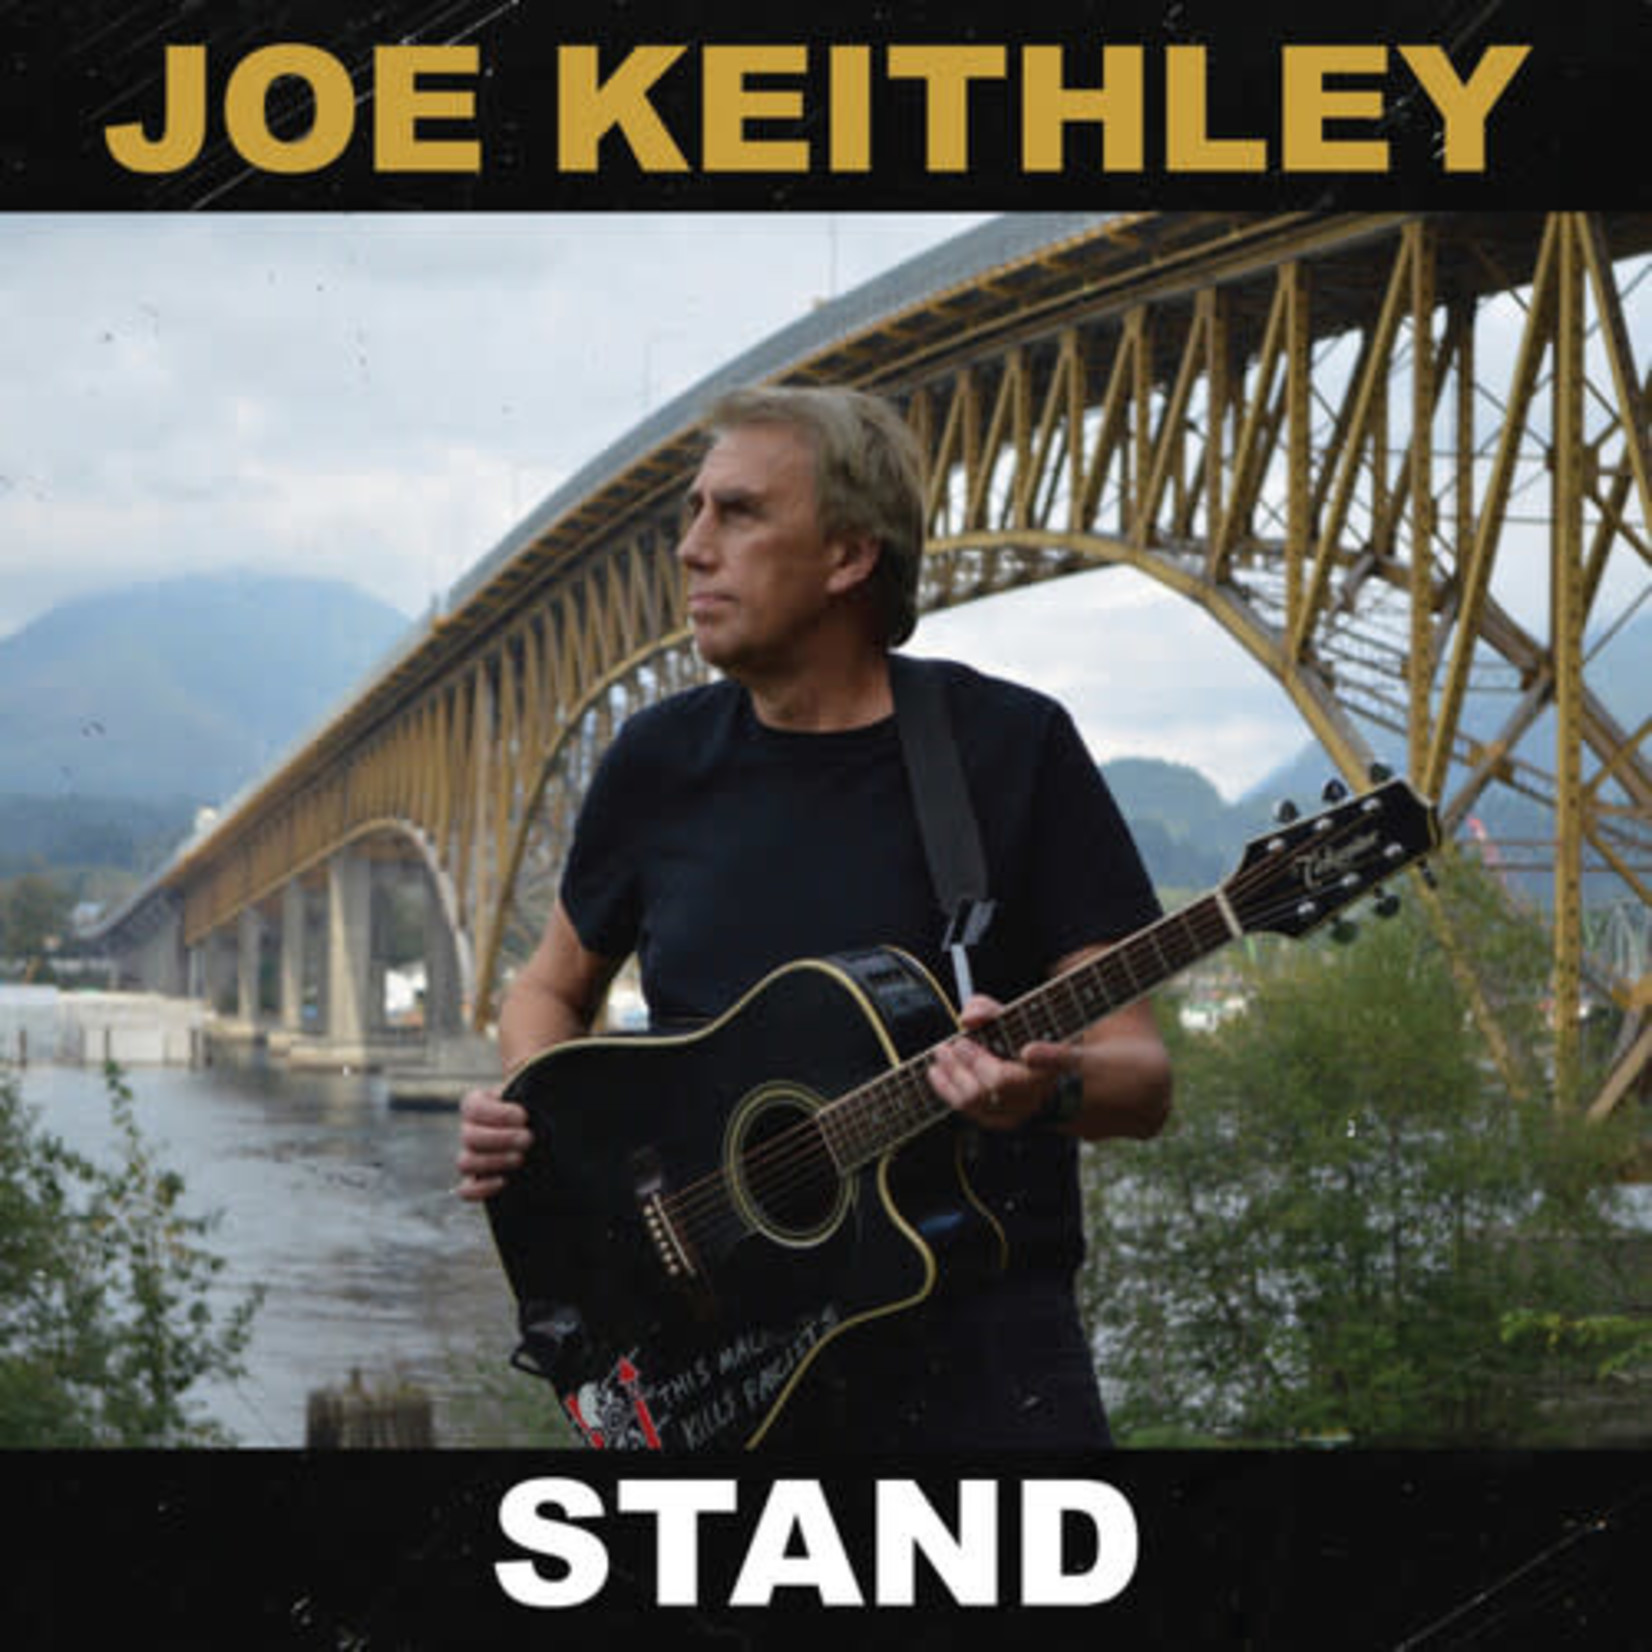 Joe Keithley - Stand [CD]